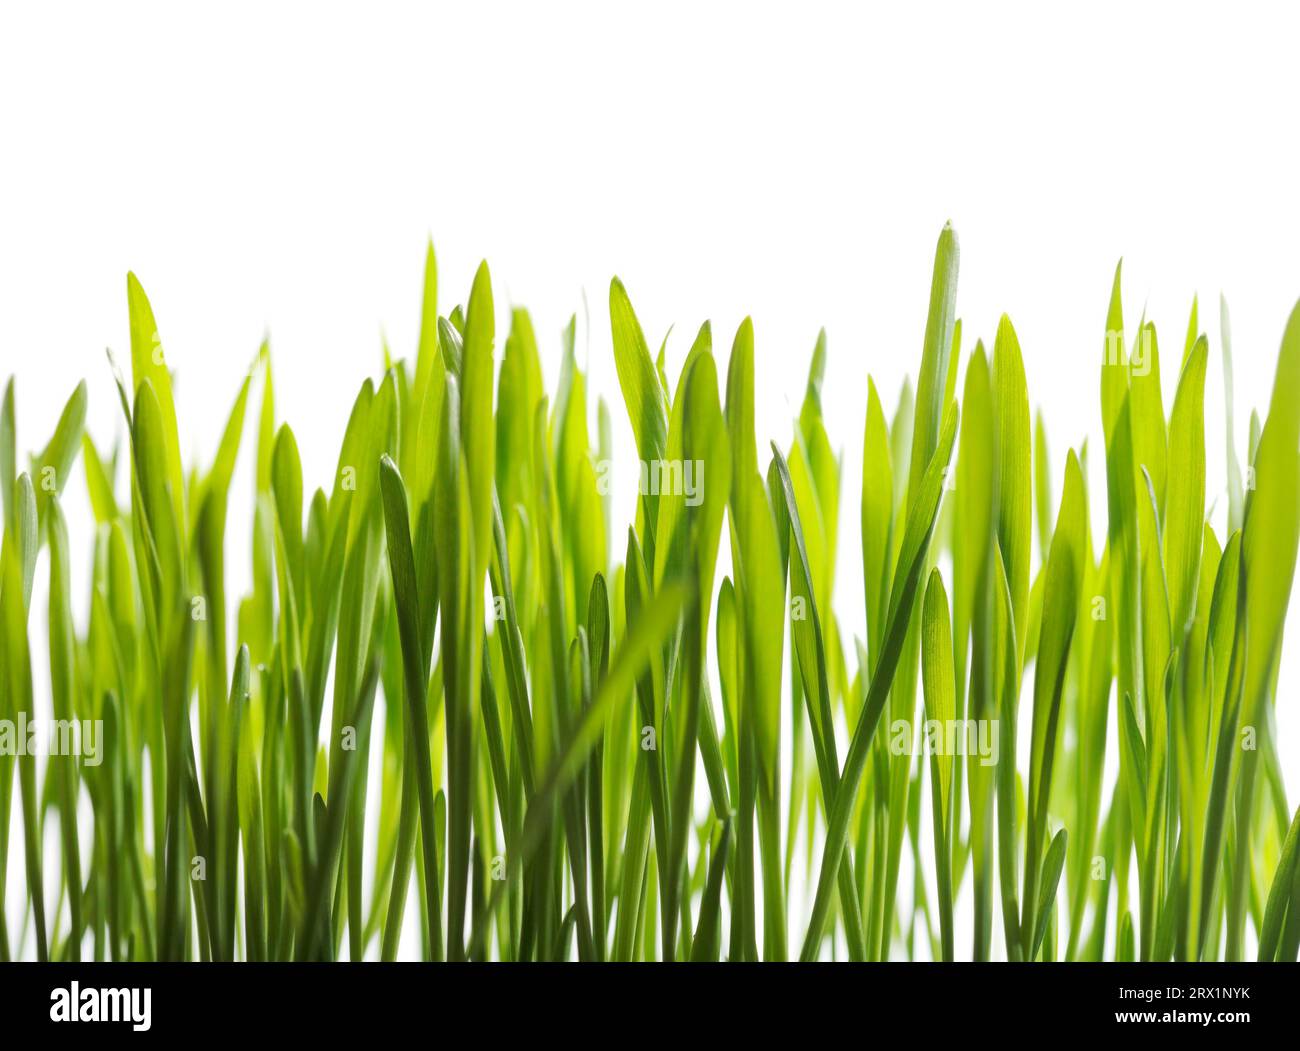 Small green barley seedlings growing Stock Photo